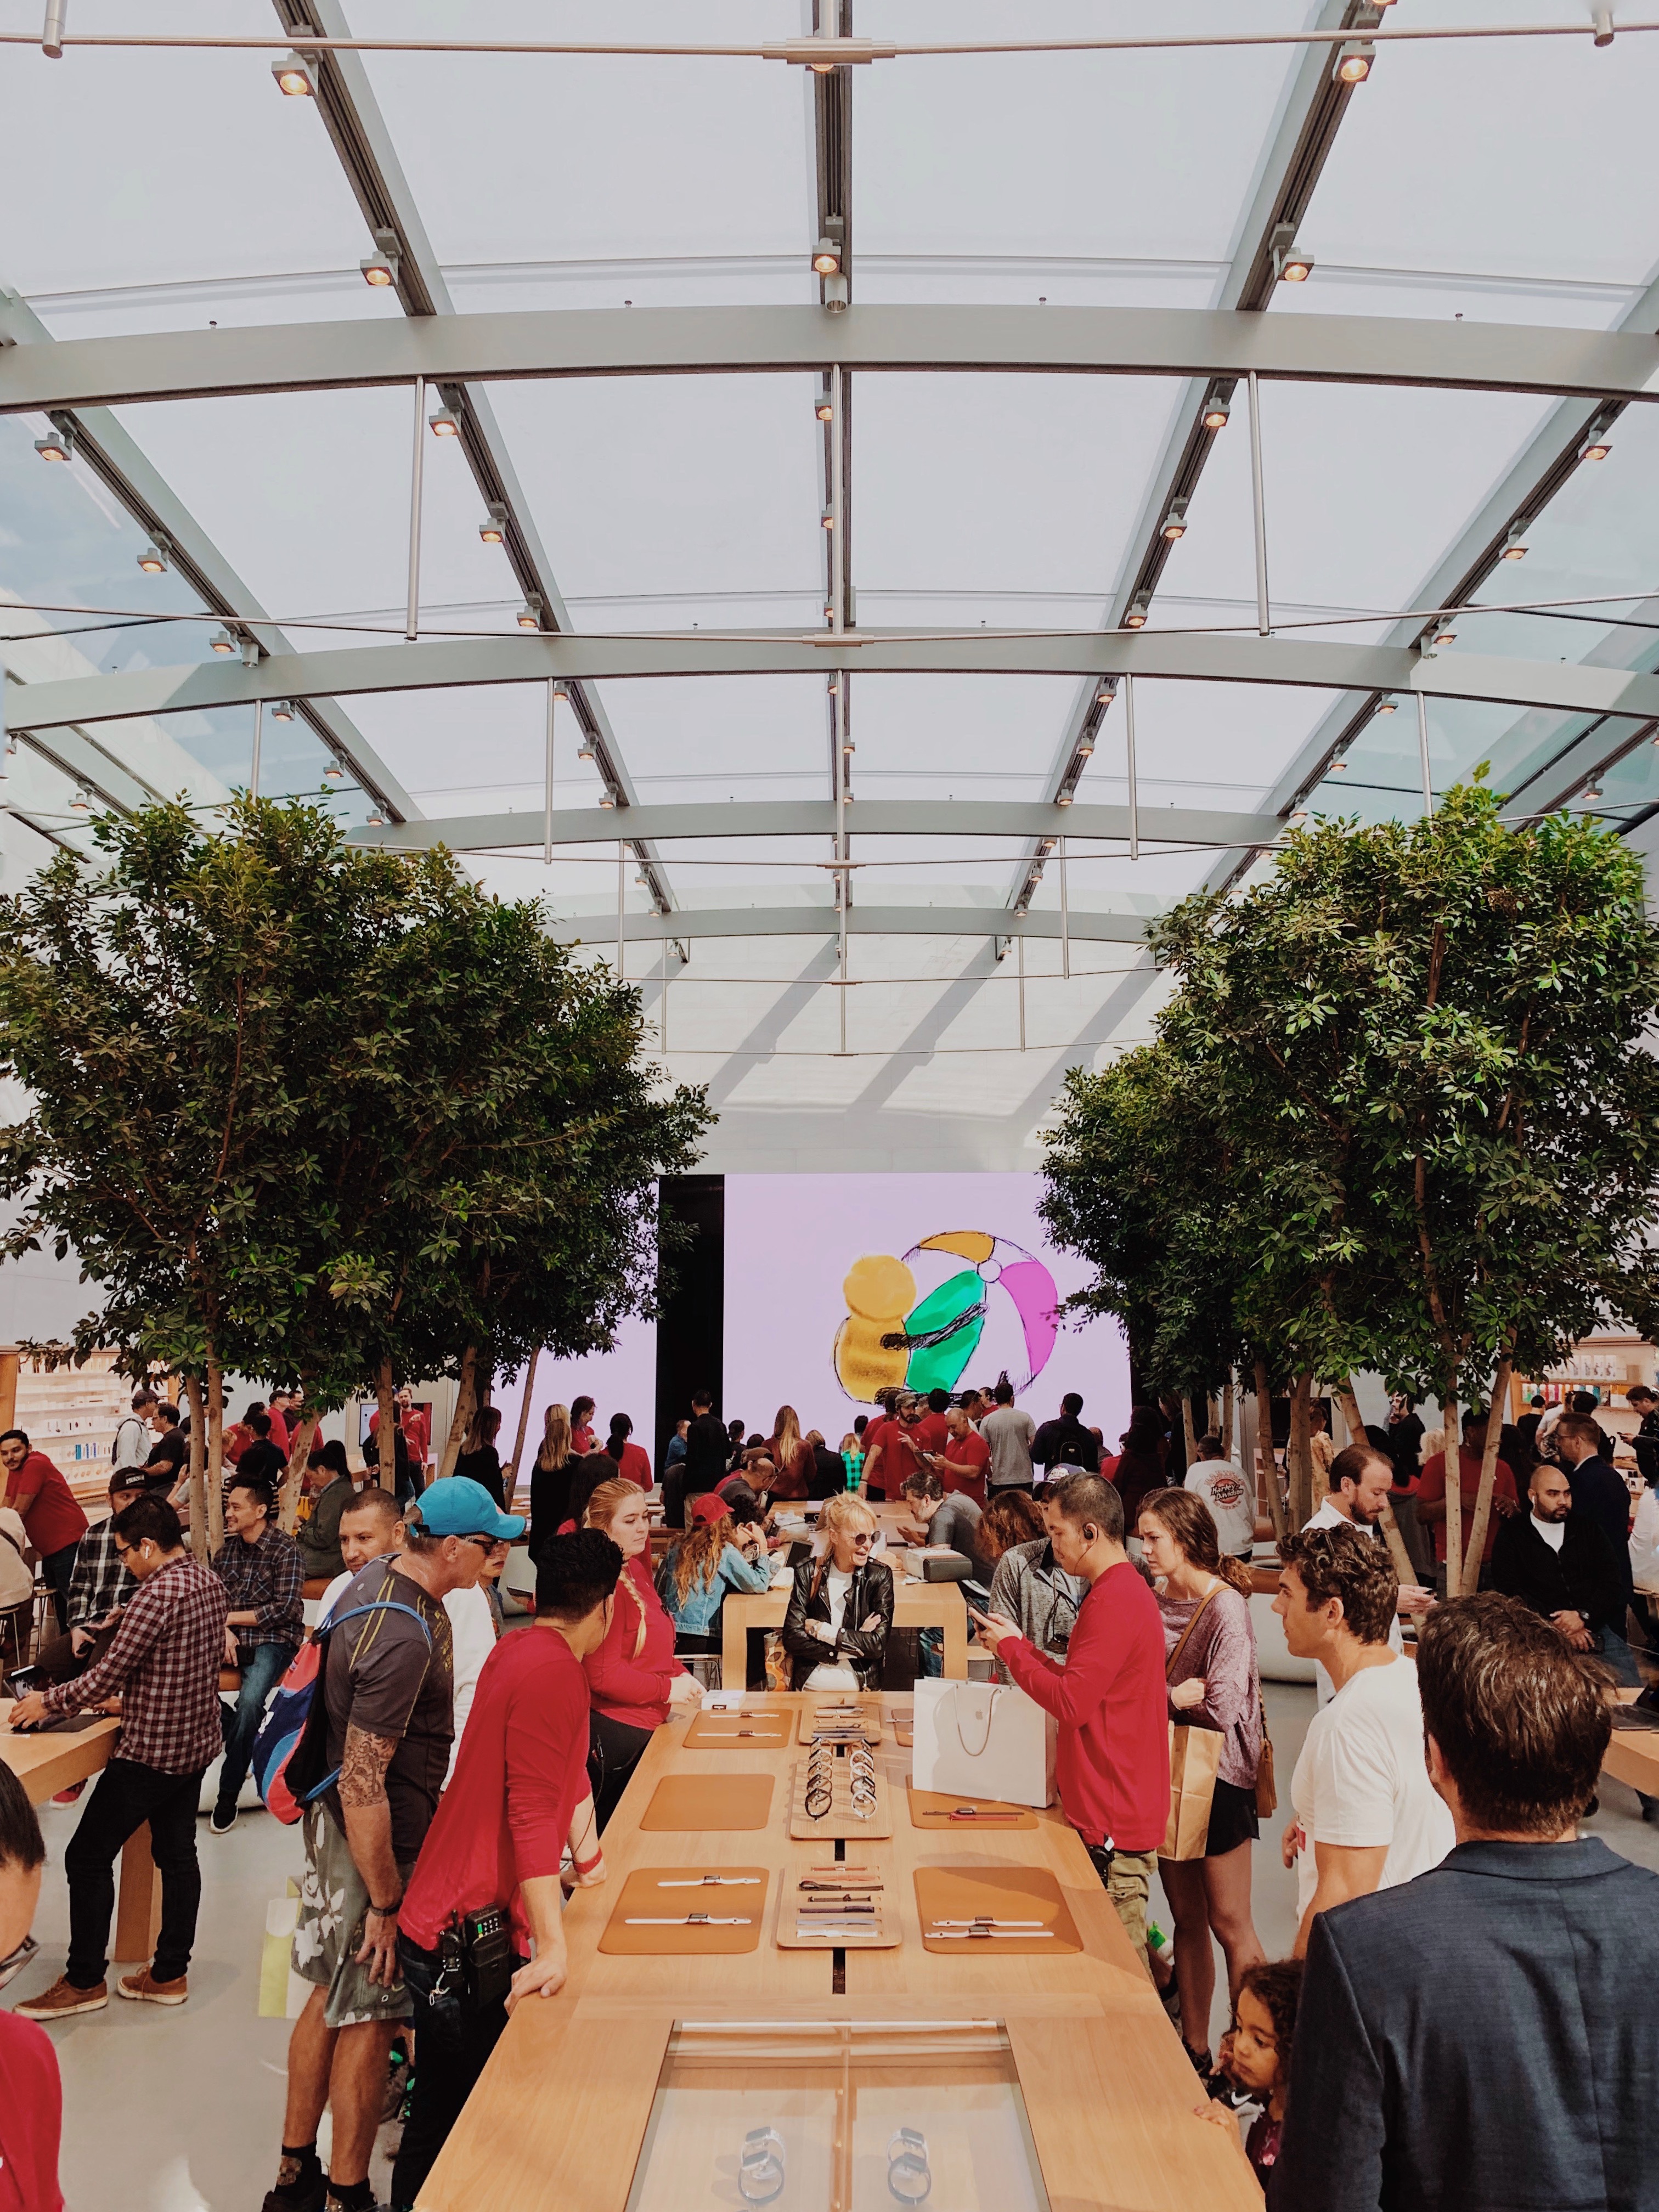 Apple's remodeled flagship Santa Monica store